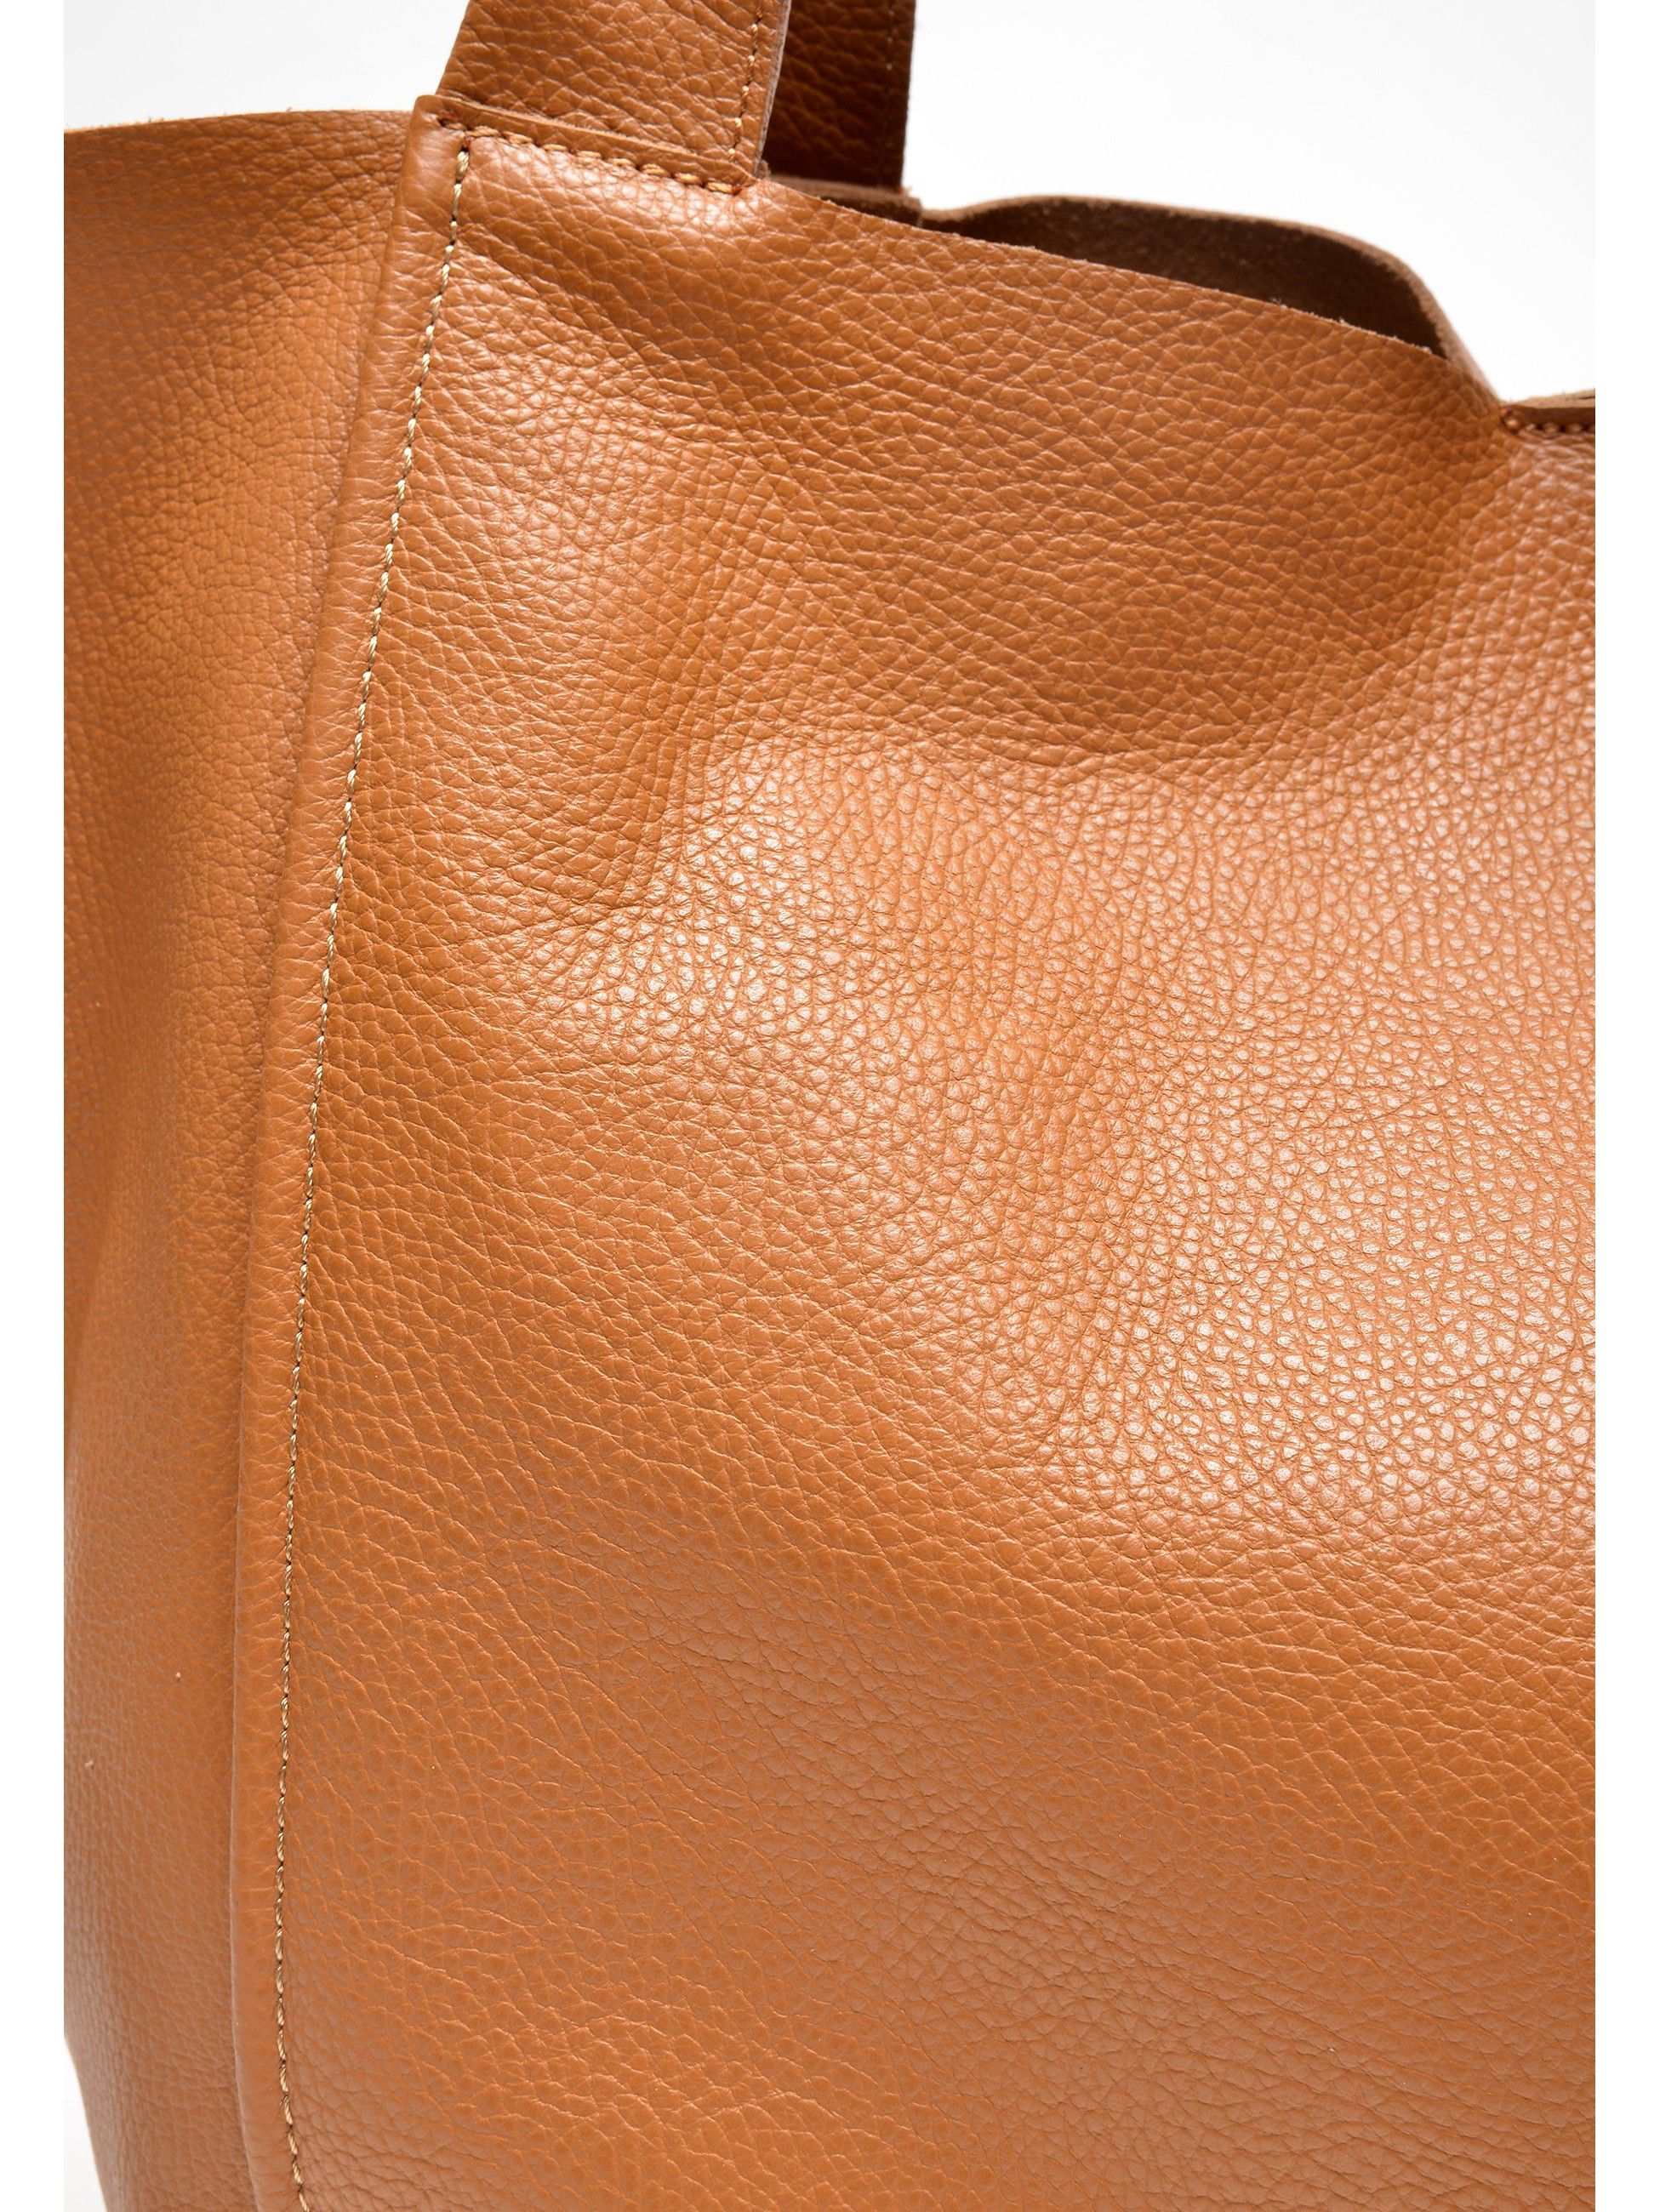 Tote Bag
100% cow leather
Drawstring closure
Inner zipped purse
Front pocket
Dimensions (L):38x54x19cm
Handle: 52 cm non adjustable
Shoulder strap: /